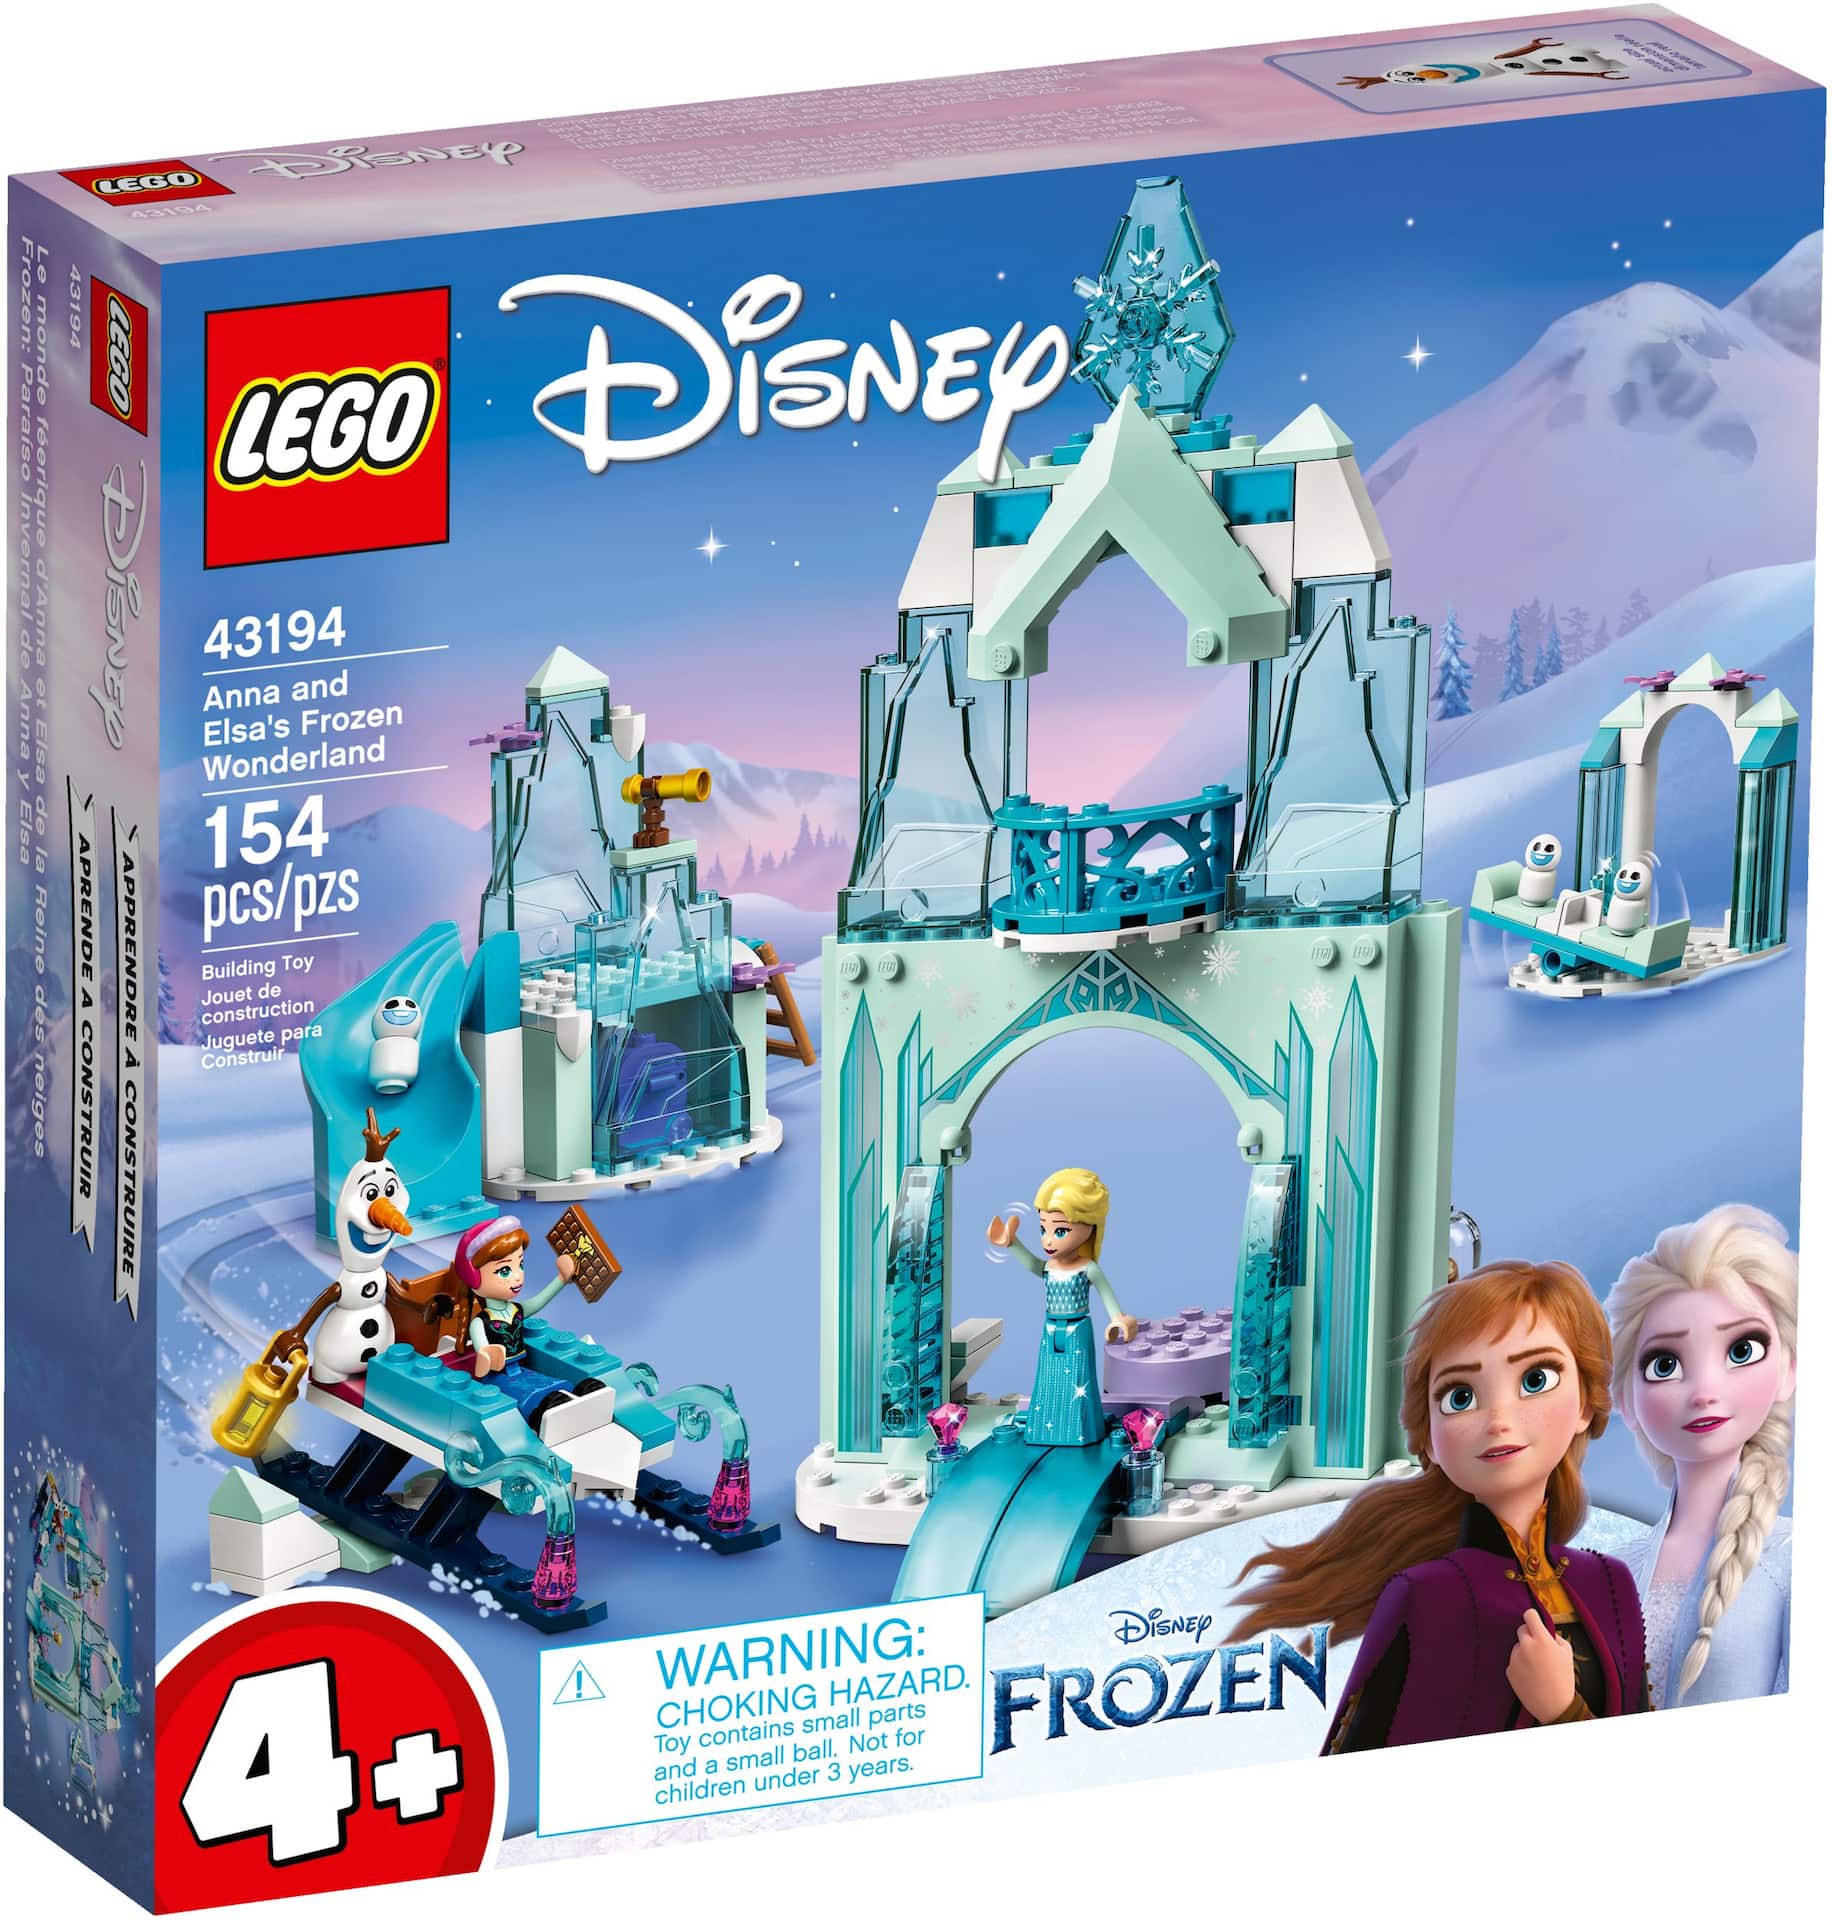 LEGO® Disney Anna and Elsa's Frozen Wonderland - 43194, 154 pcs